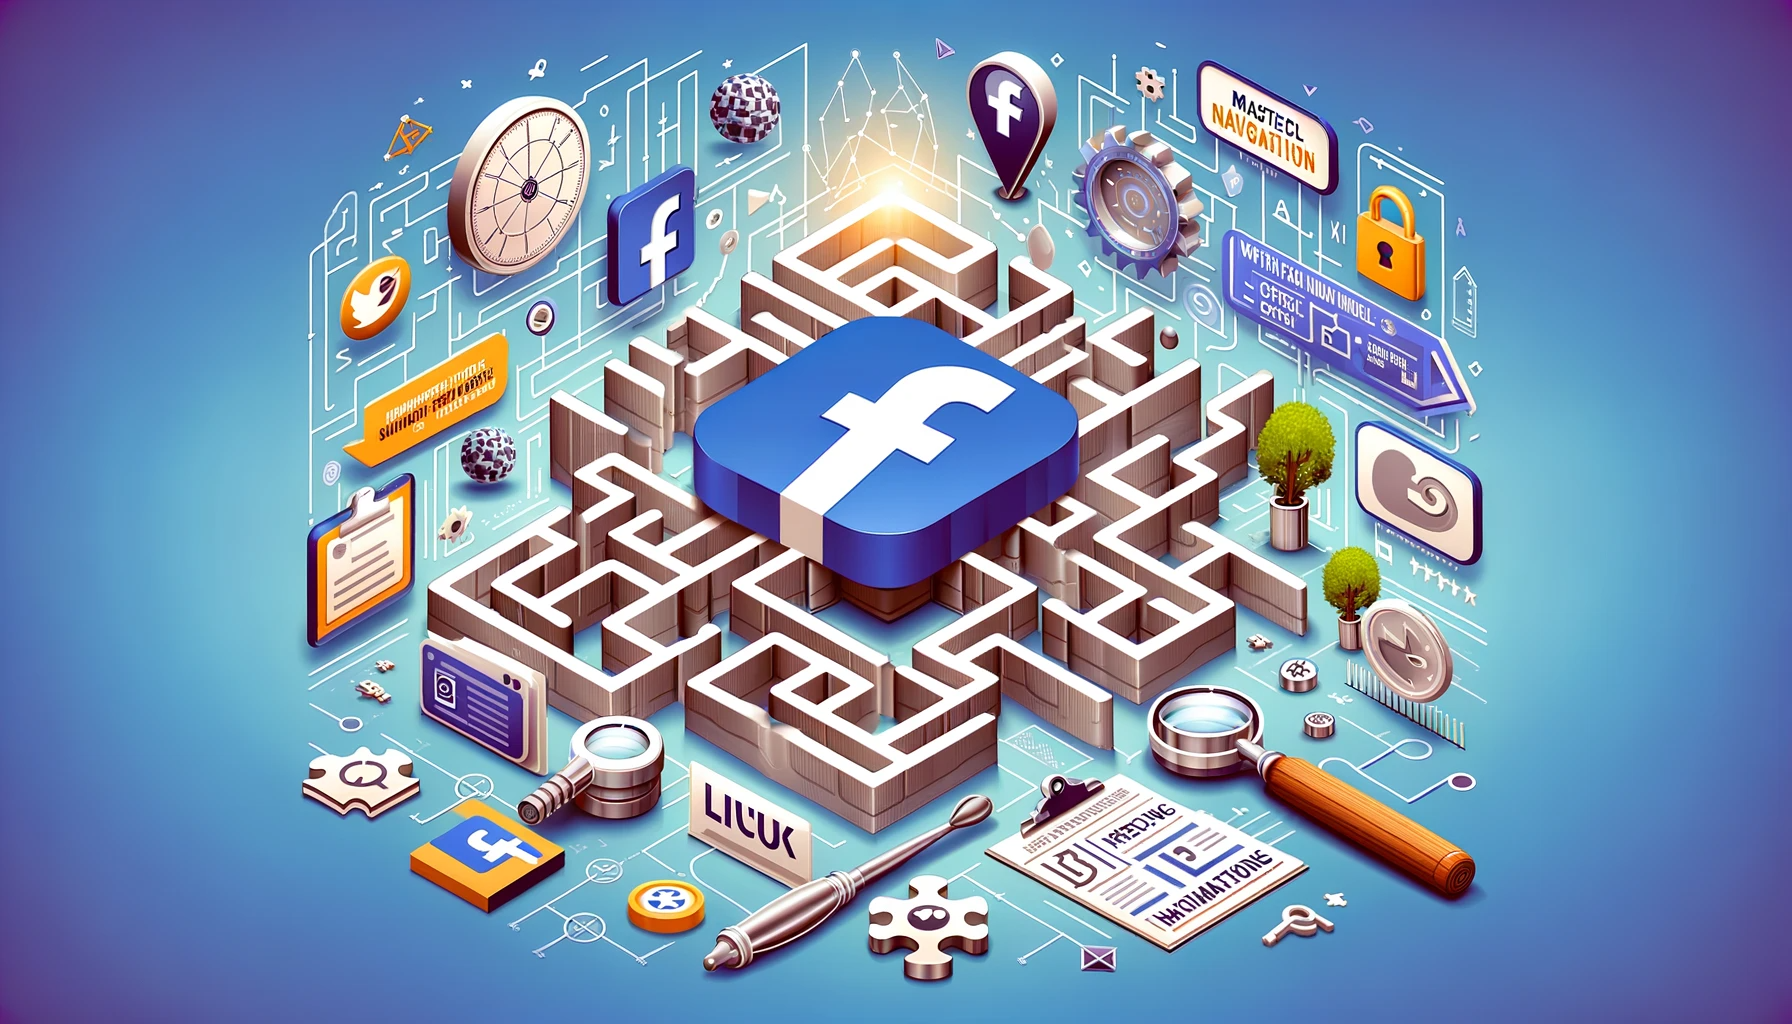 navigating-facebooks-algorithm-with-rank-panels-expertise